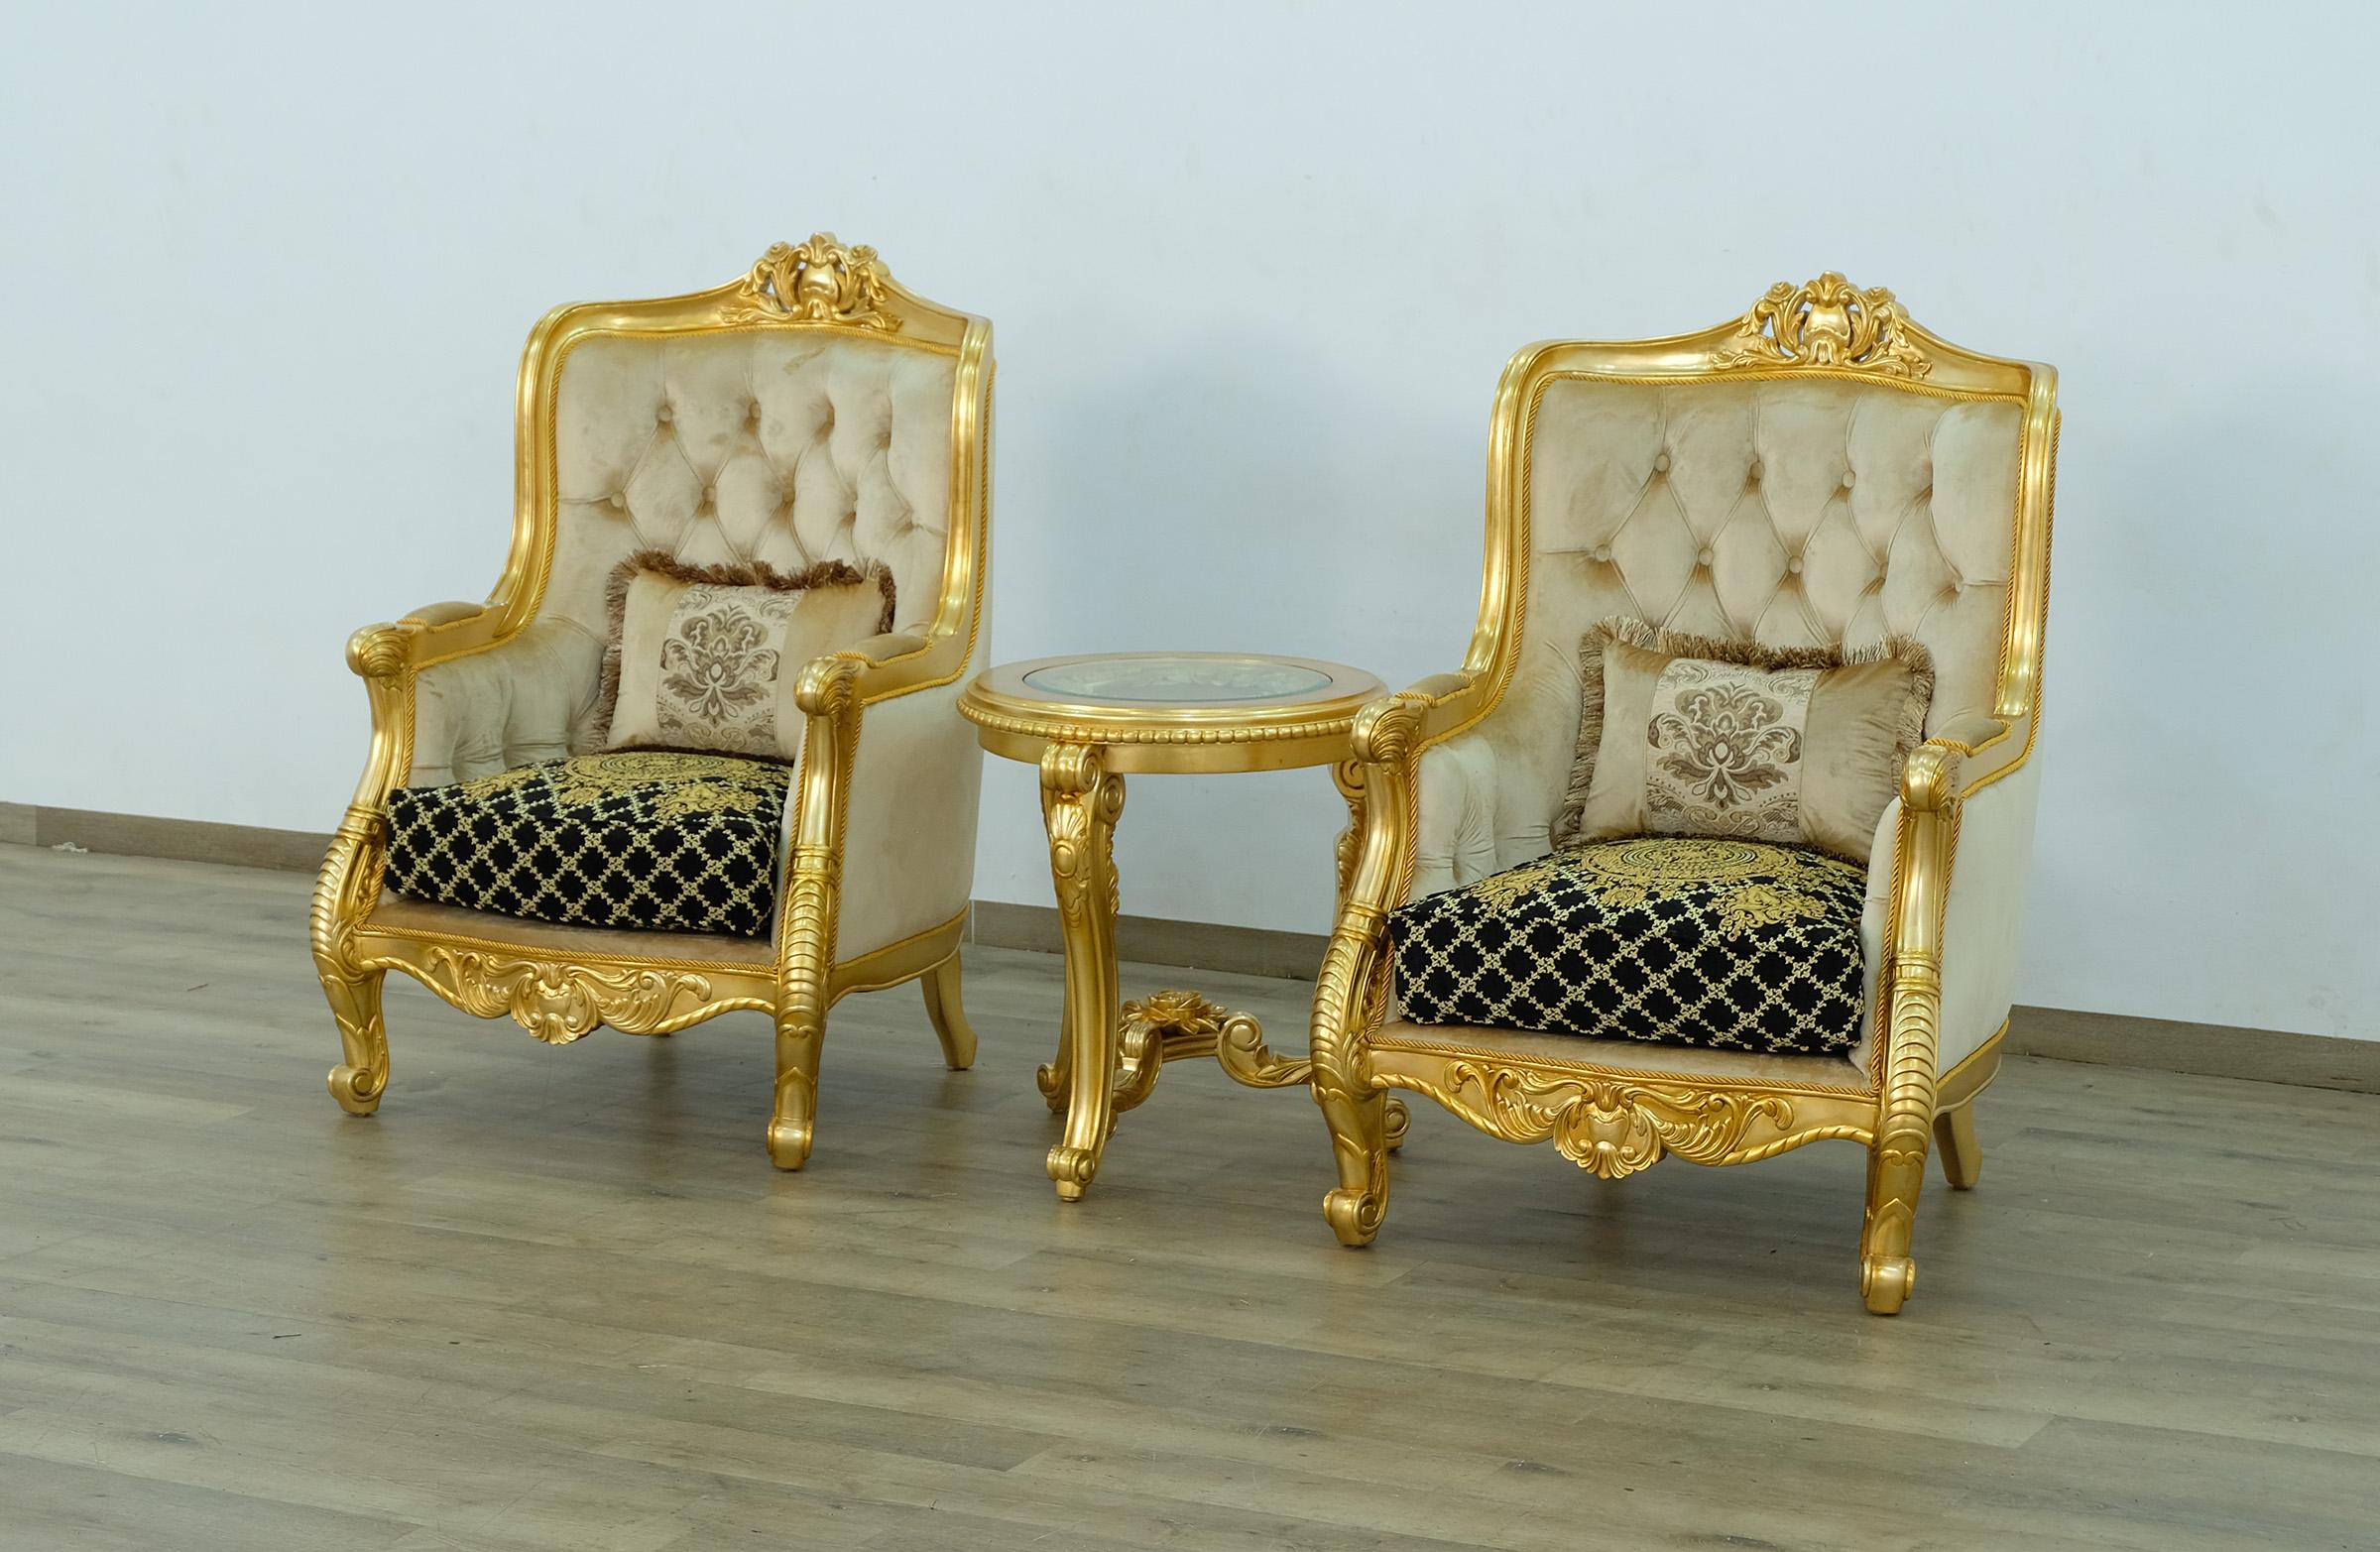 Classic, Traditional Arm Chair Set LUXOR 68585-C-Set-2 in Ebony, Antique, Mahogany, Gold, Black, Beige Fabric